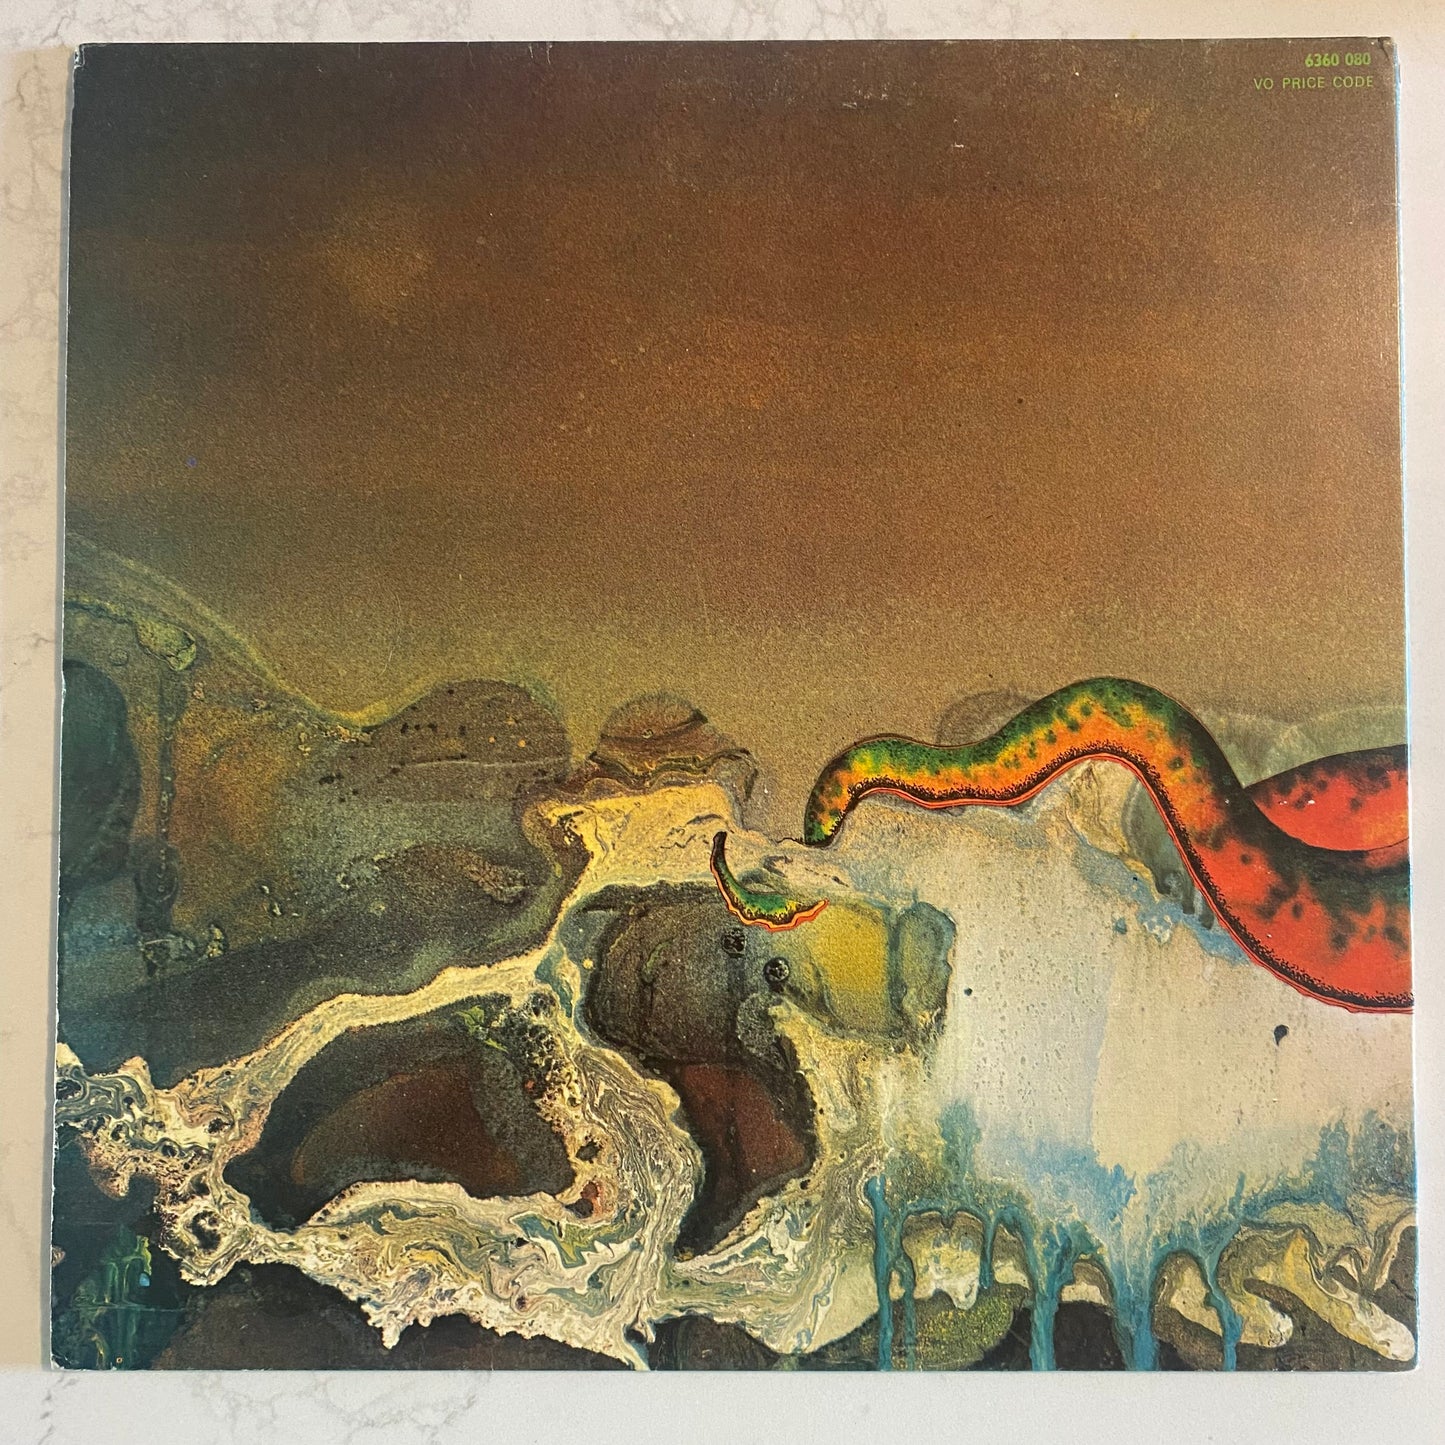 Gentle Giant - Octopus (LP, Album, RE, 4th)